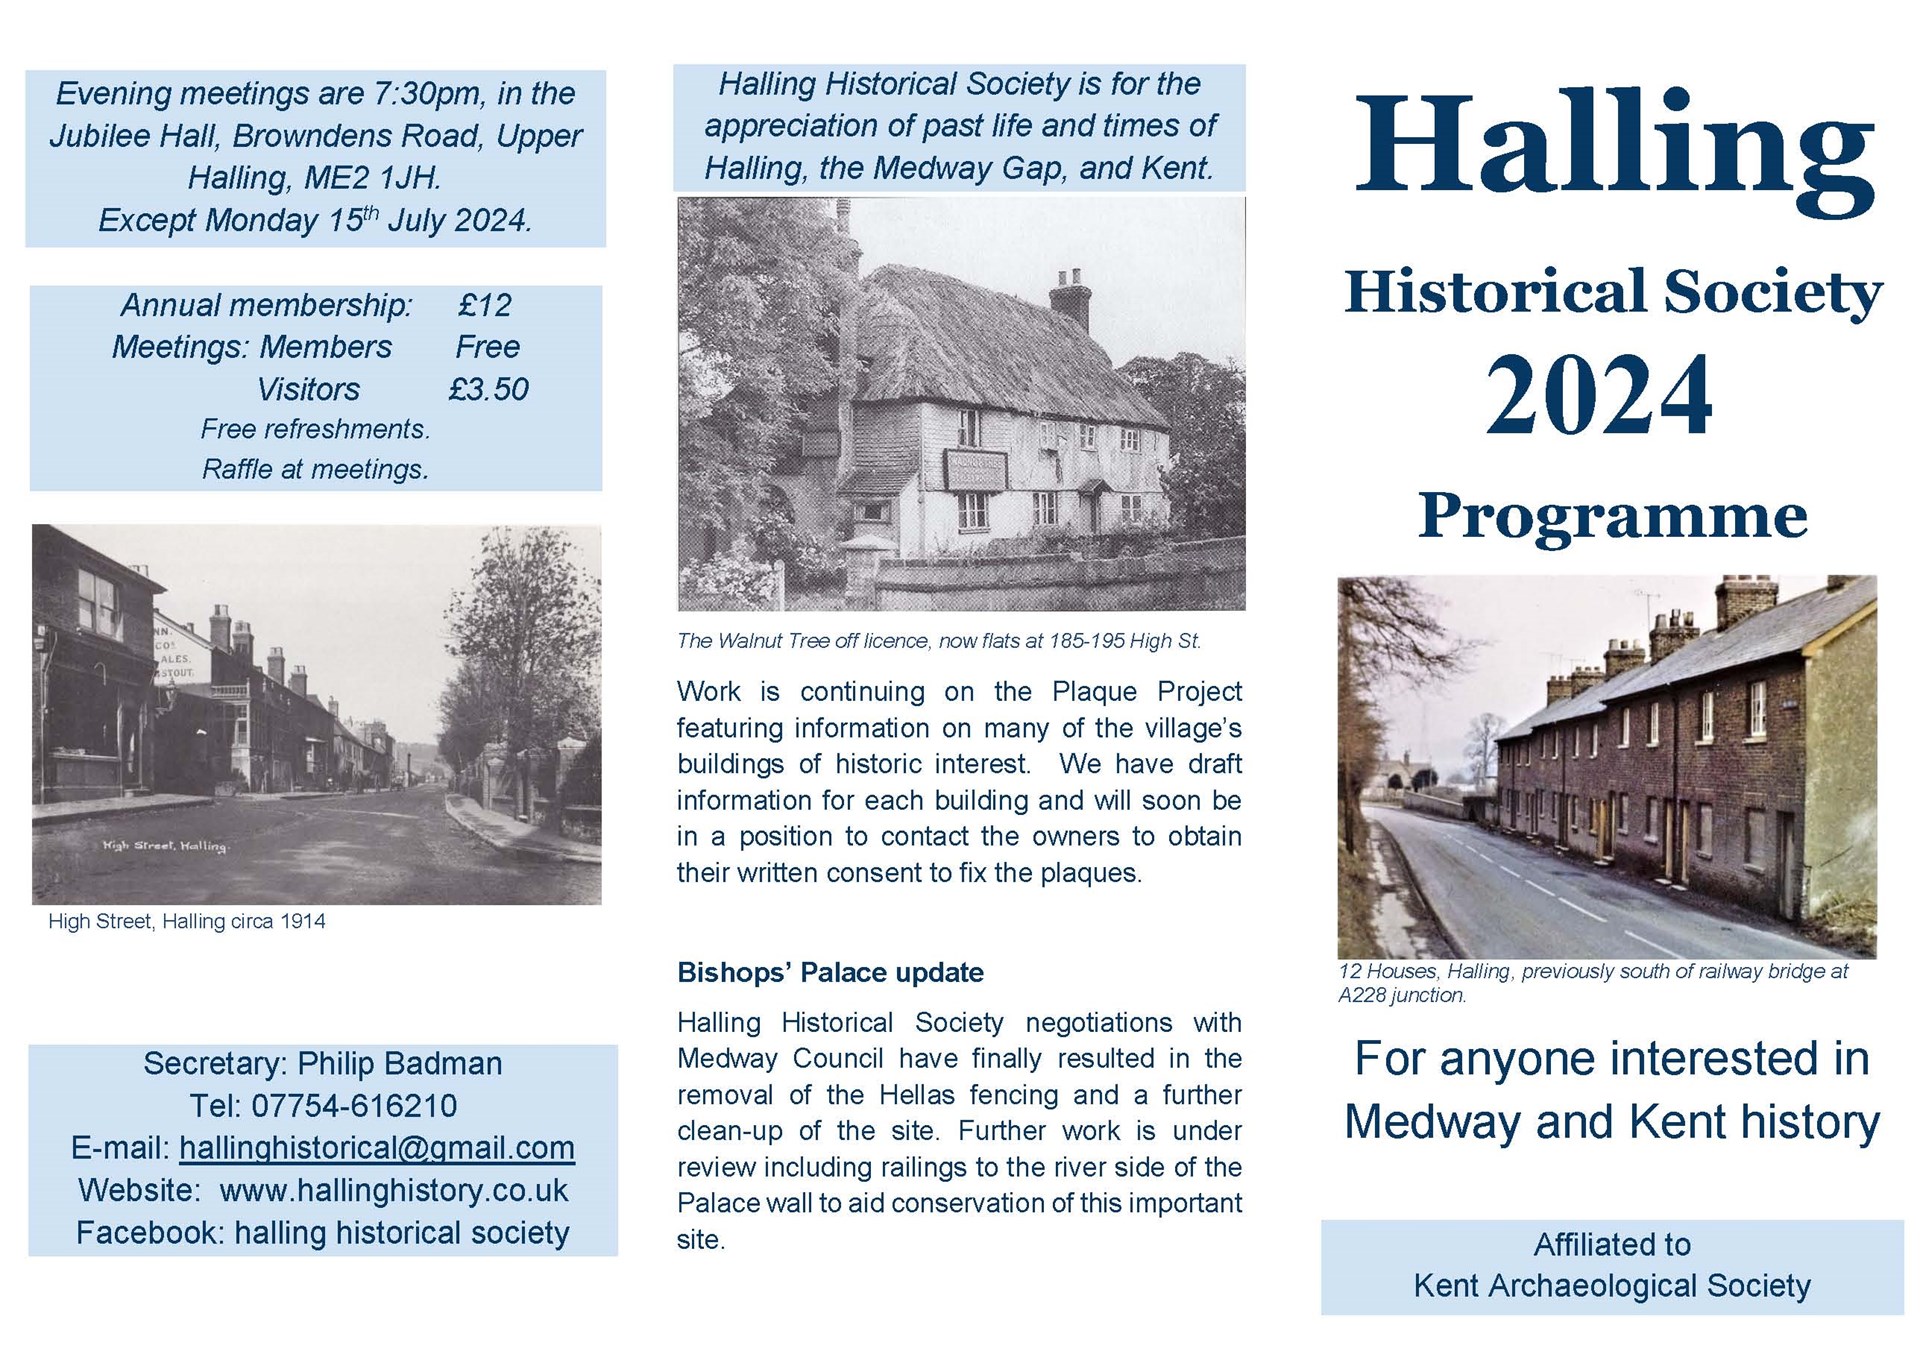 Halling Historical Society Programme